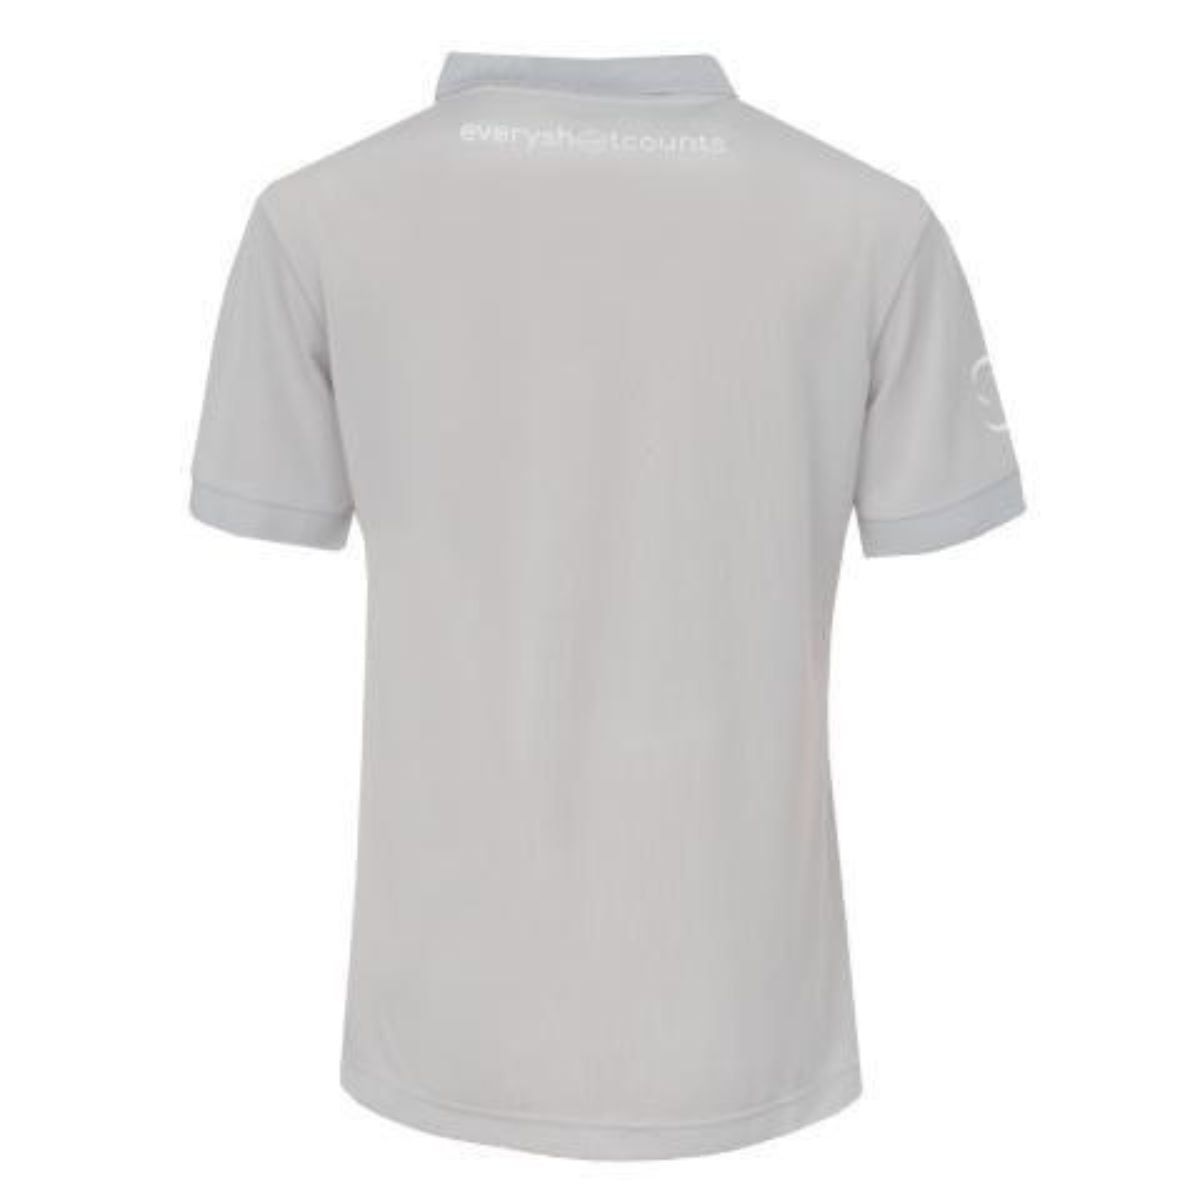 Girls Golf Polo Shirt - Grey